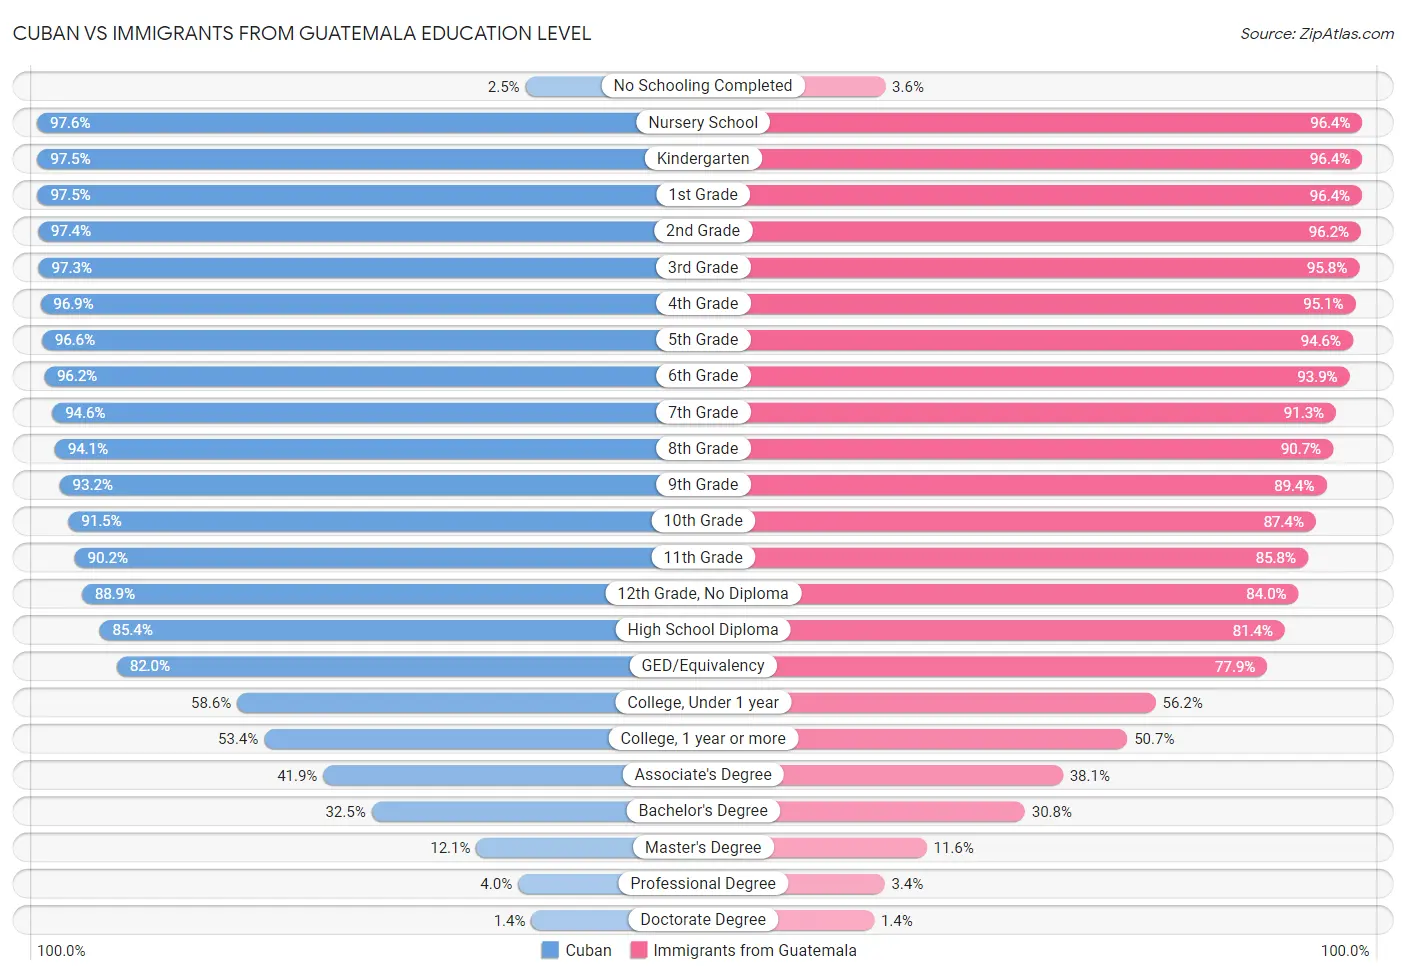 Cuban vs Immigrants from Guatemala Education Level